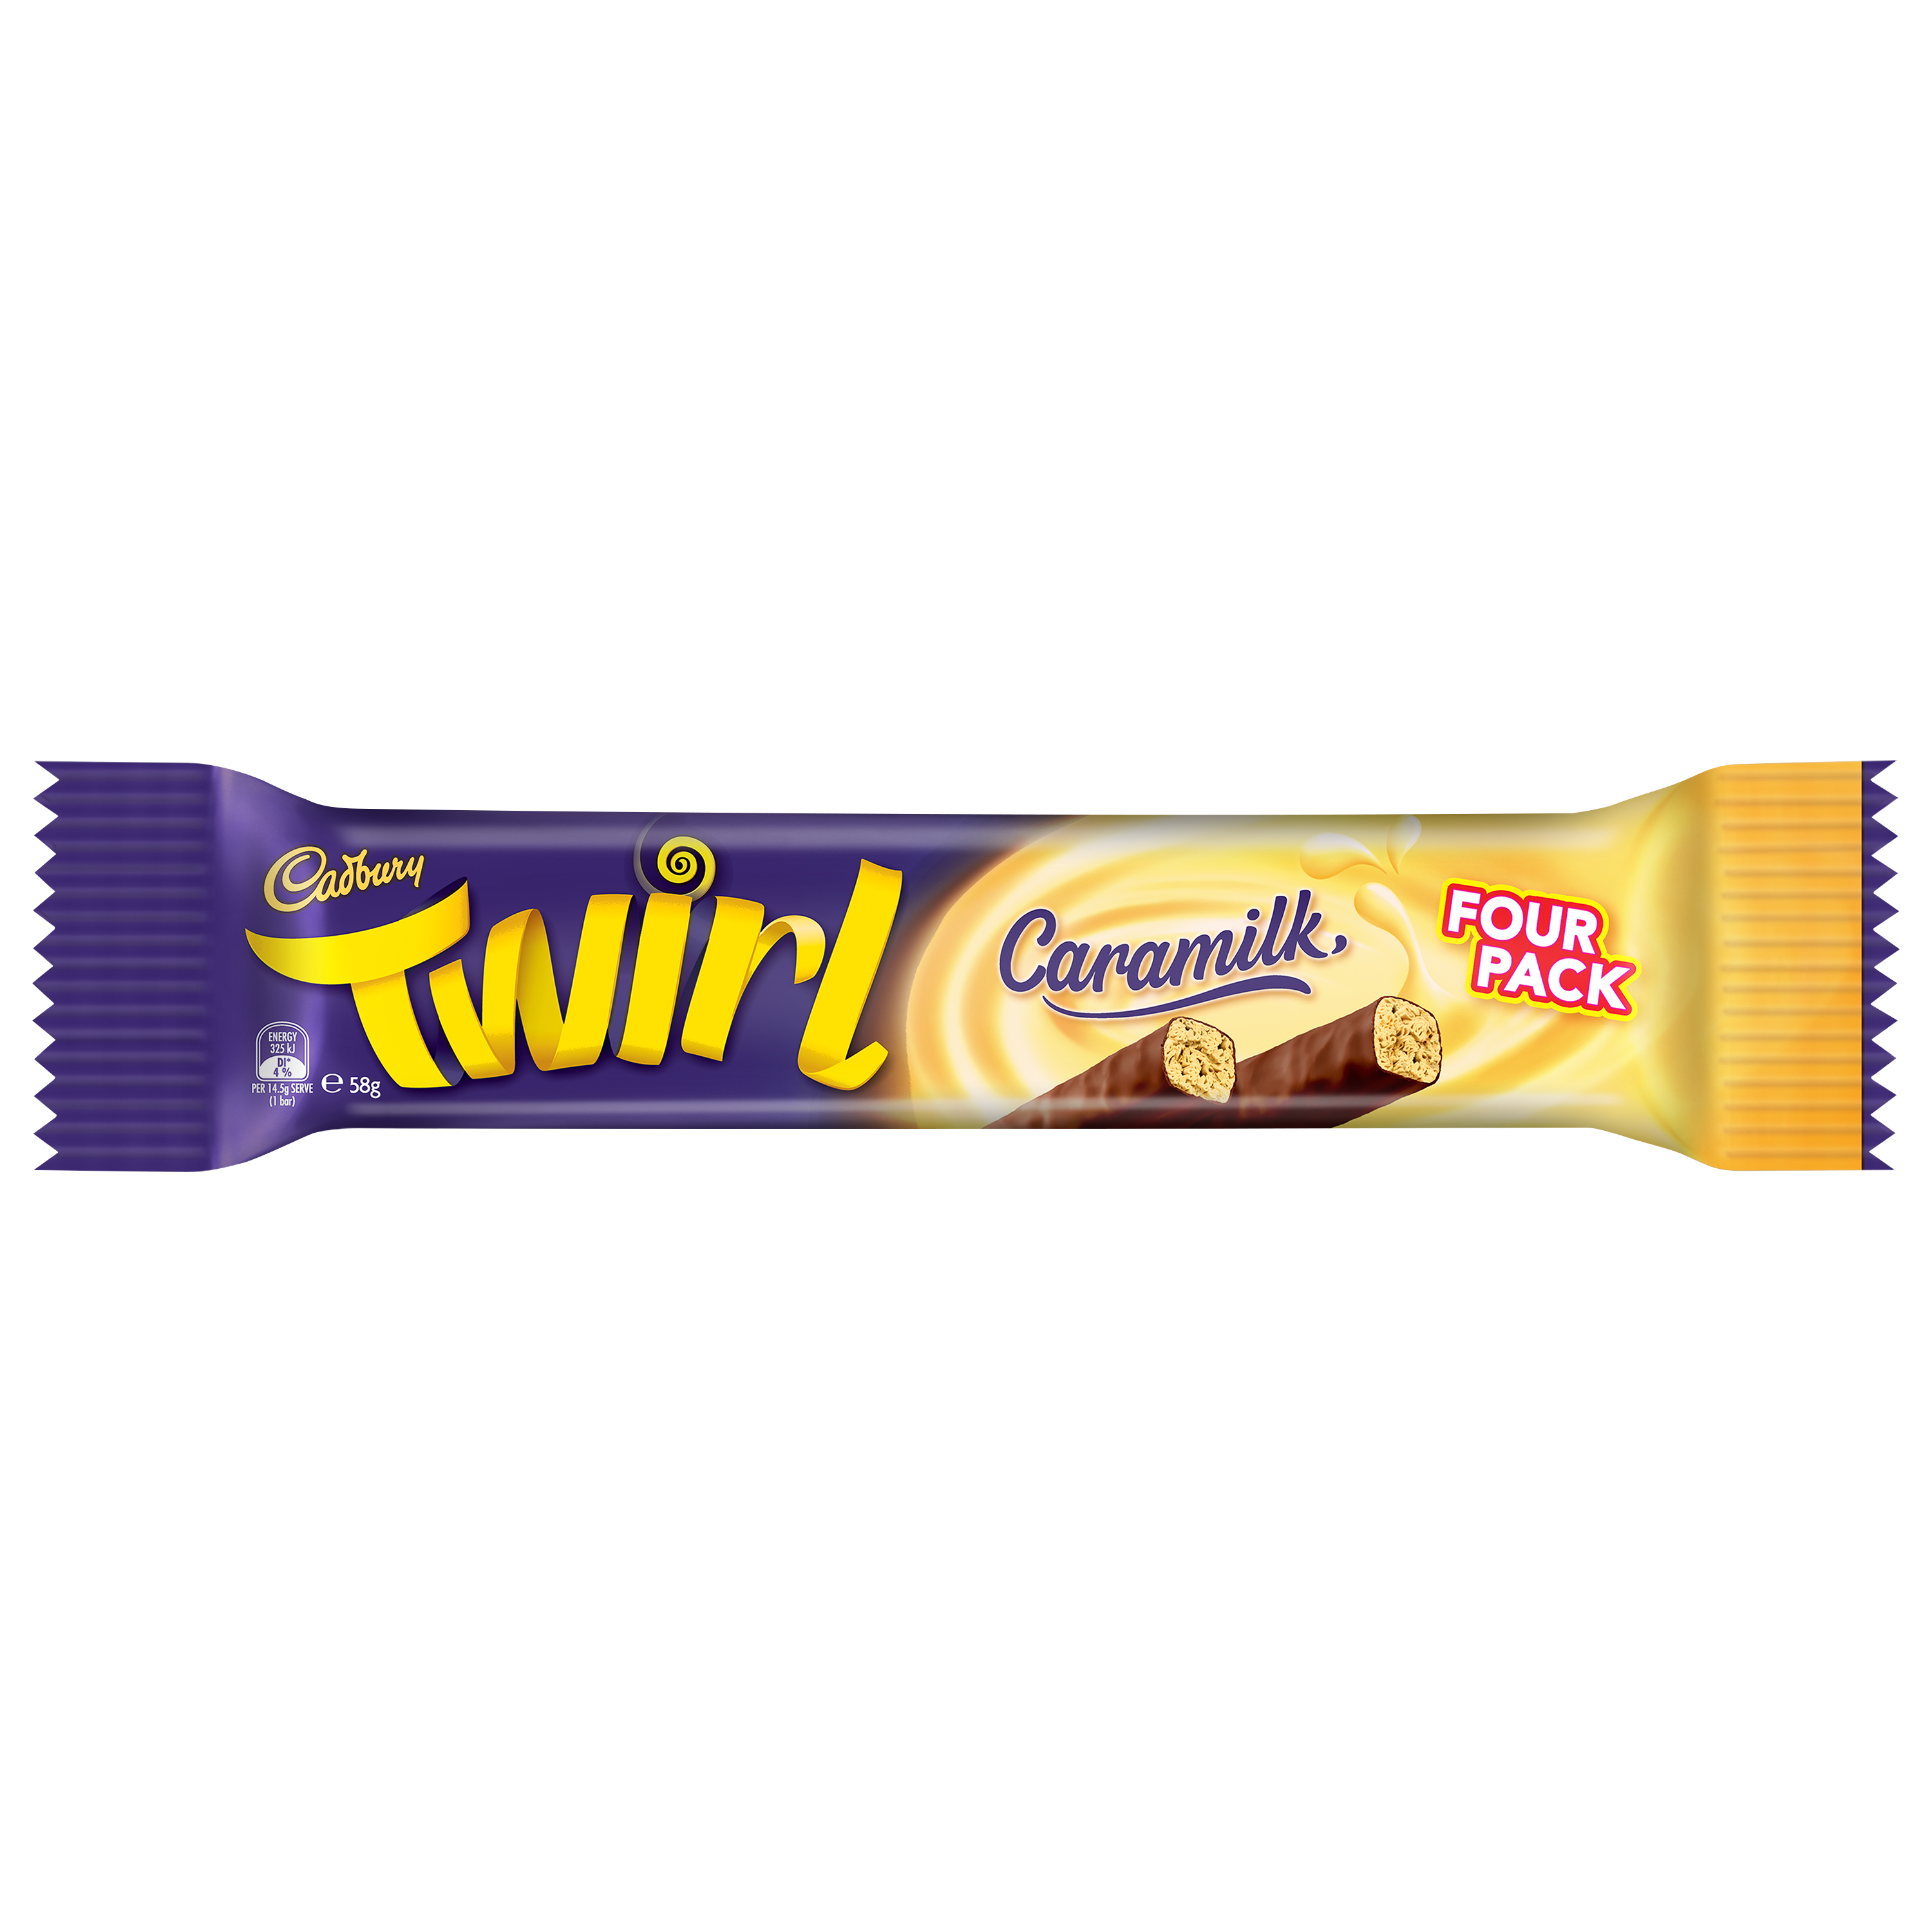 Box of 42 58g King Size Bars of Cadbury Caramilk Twirls Limitied Edition